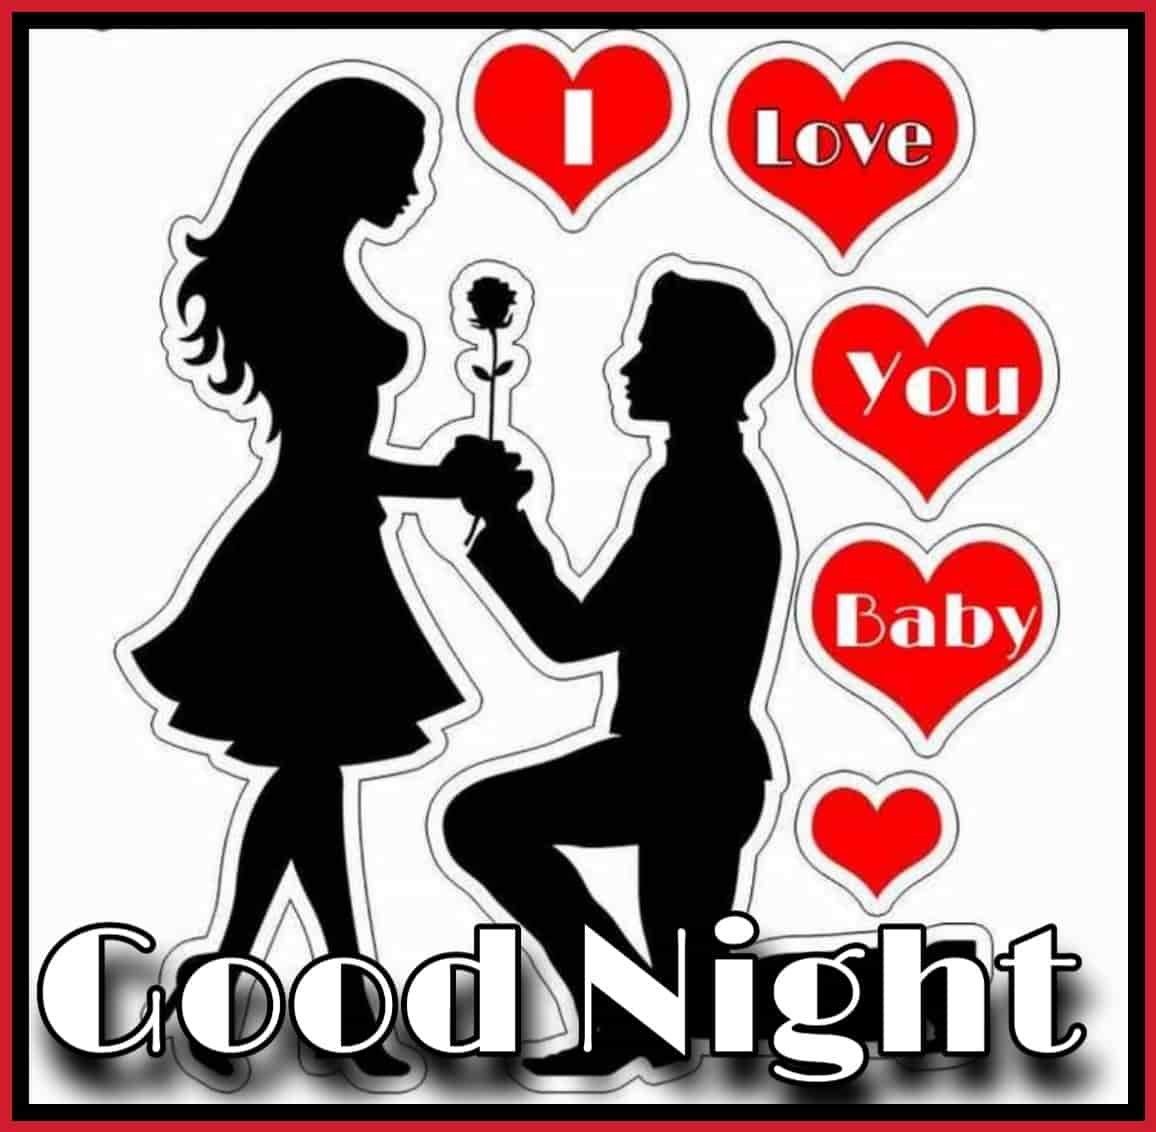 Good night love image download